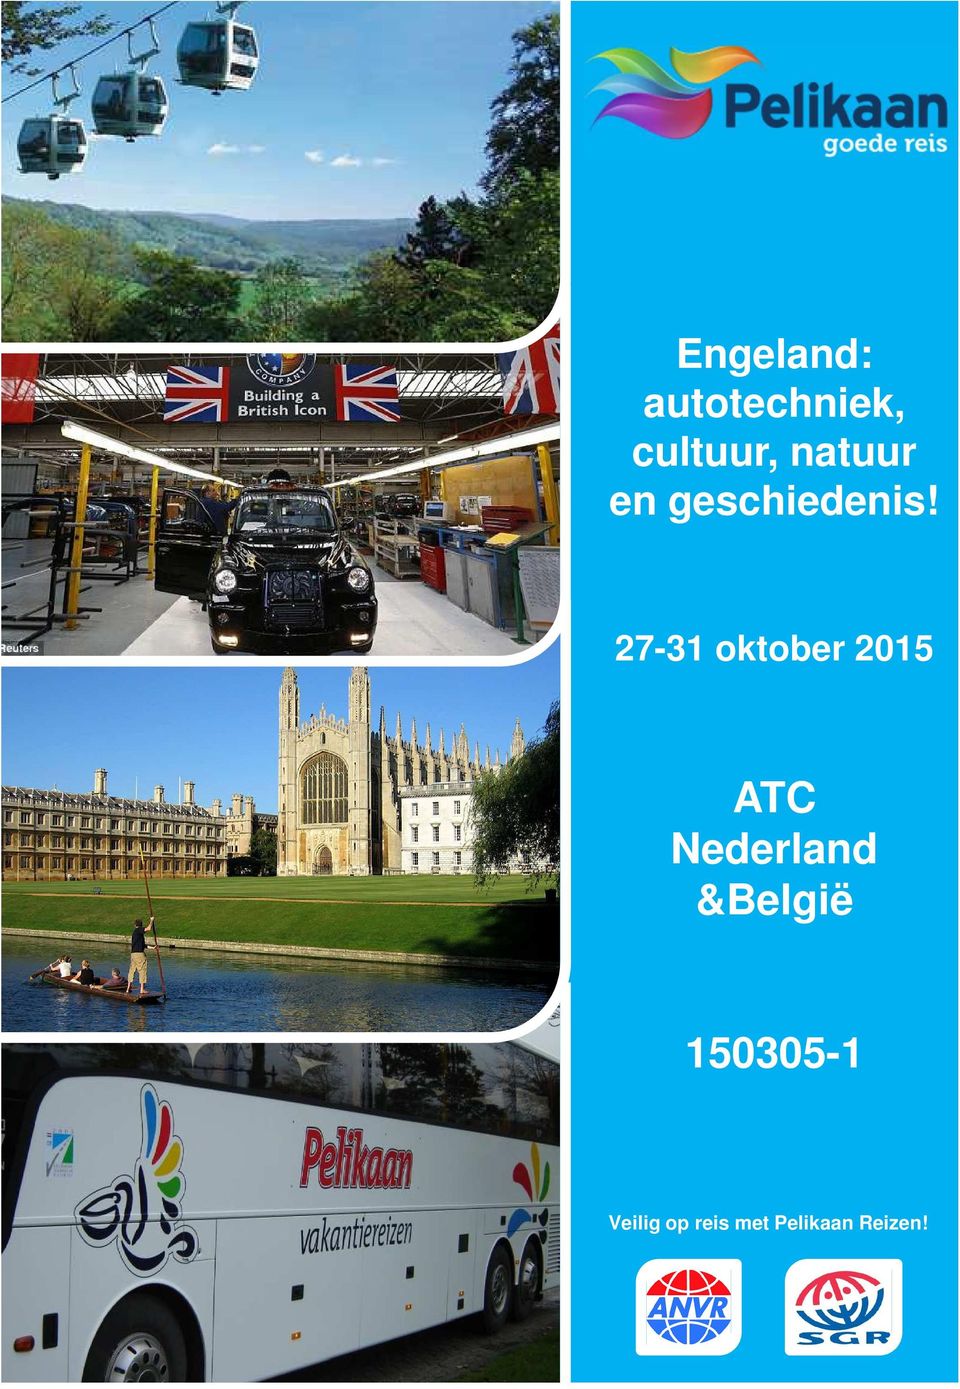 27-31 oktober 2015 ATC Nederland